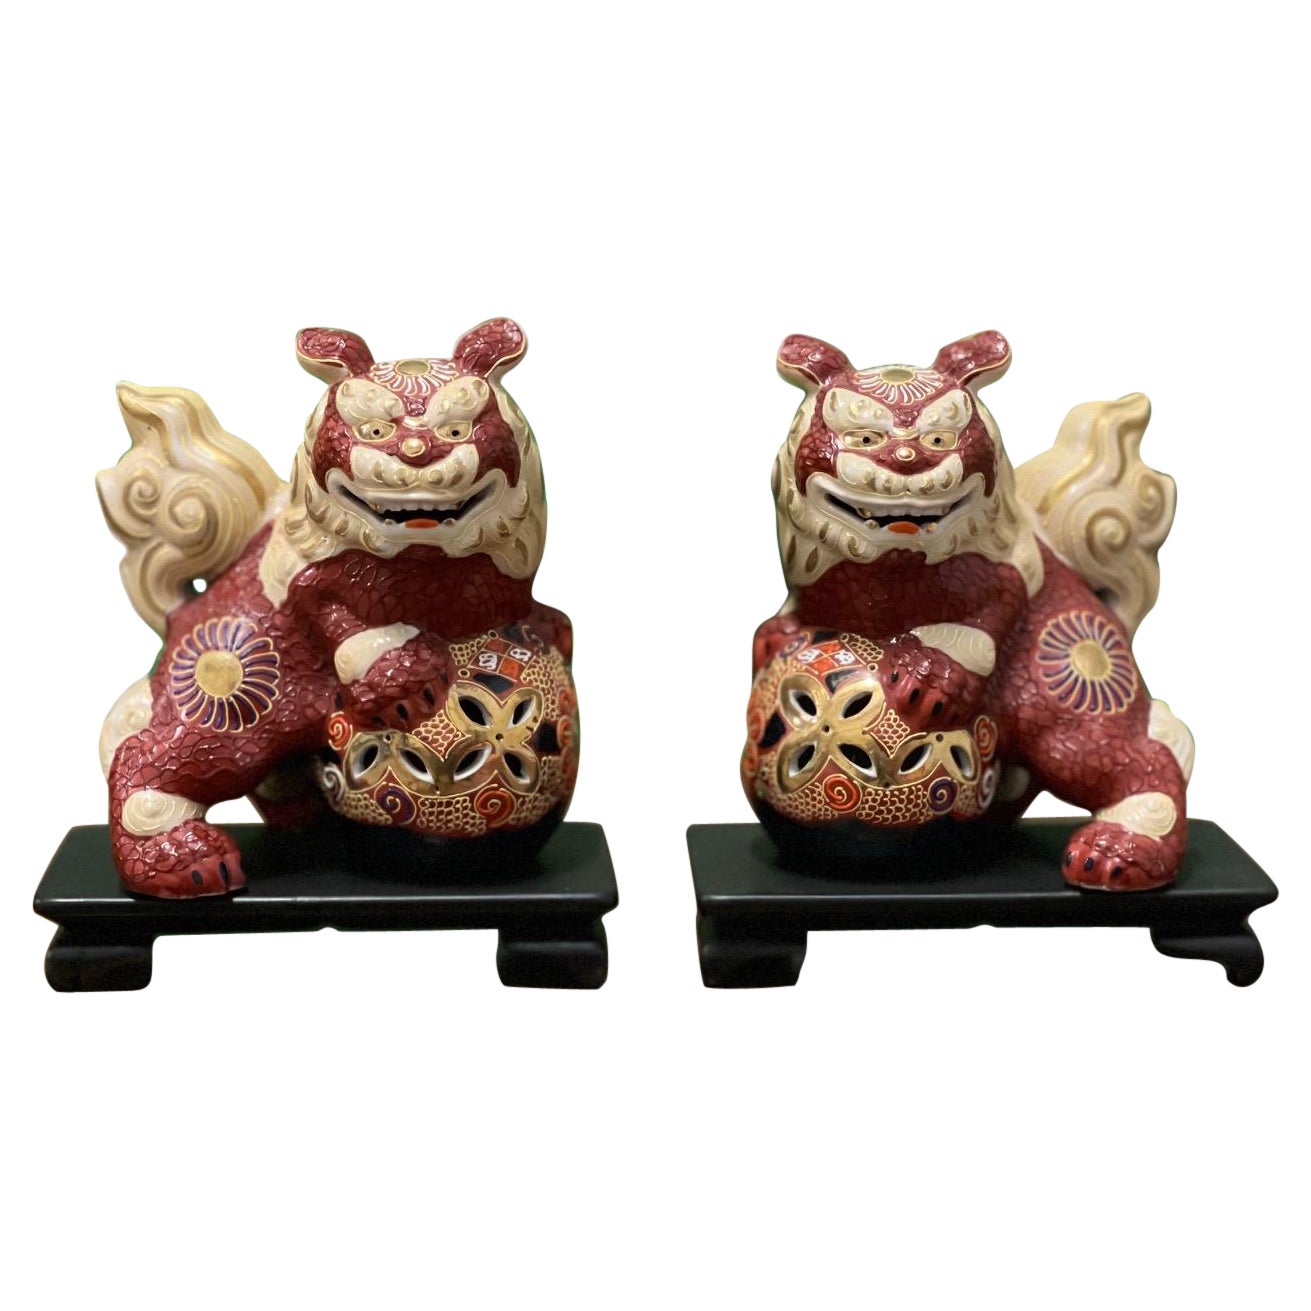 Porcelain Japanese Cinnabar Foo Dog Figurines on Stands For Sale